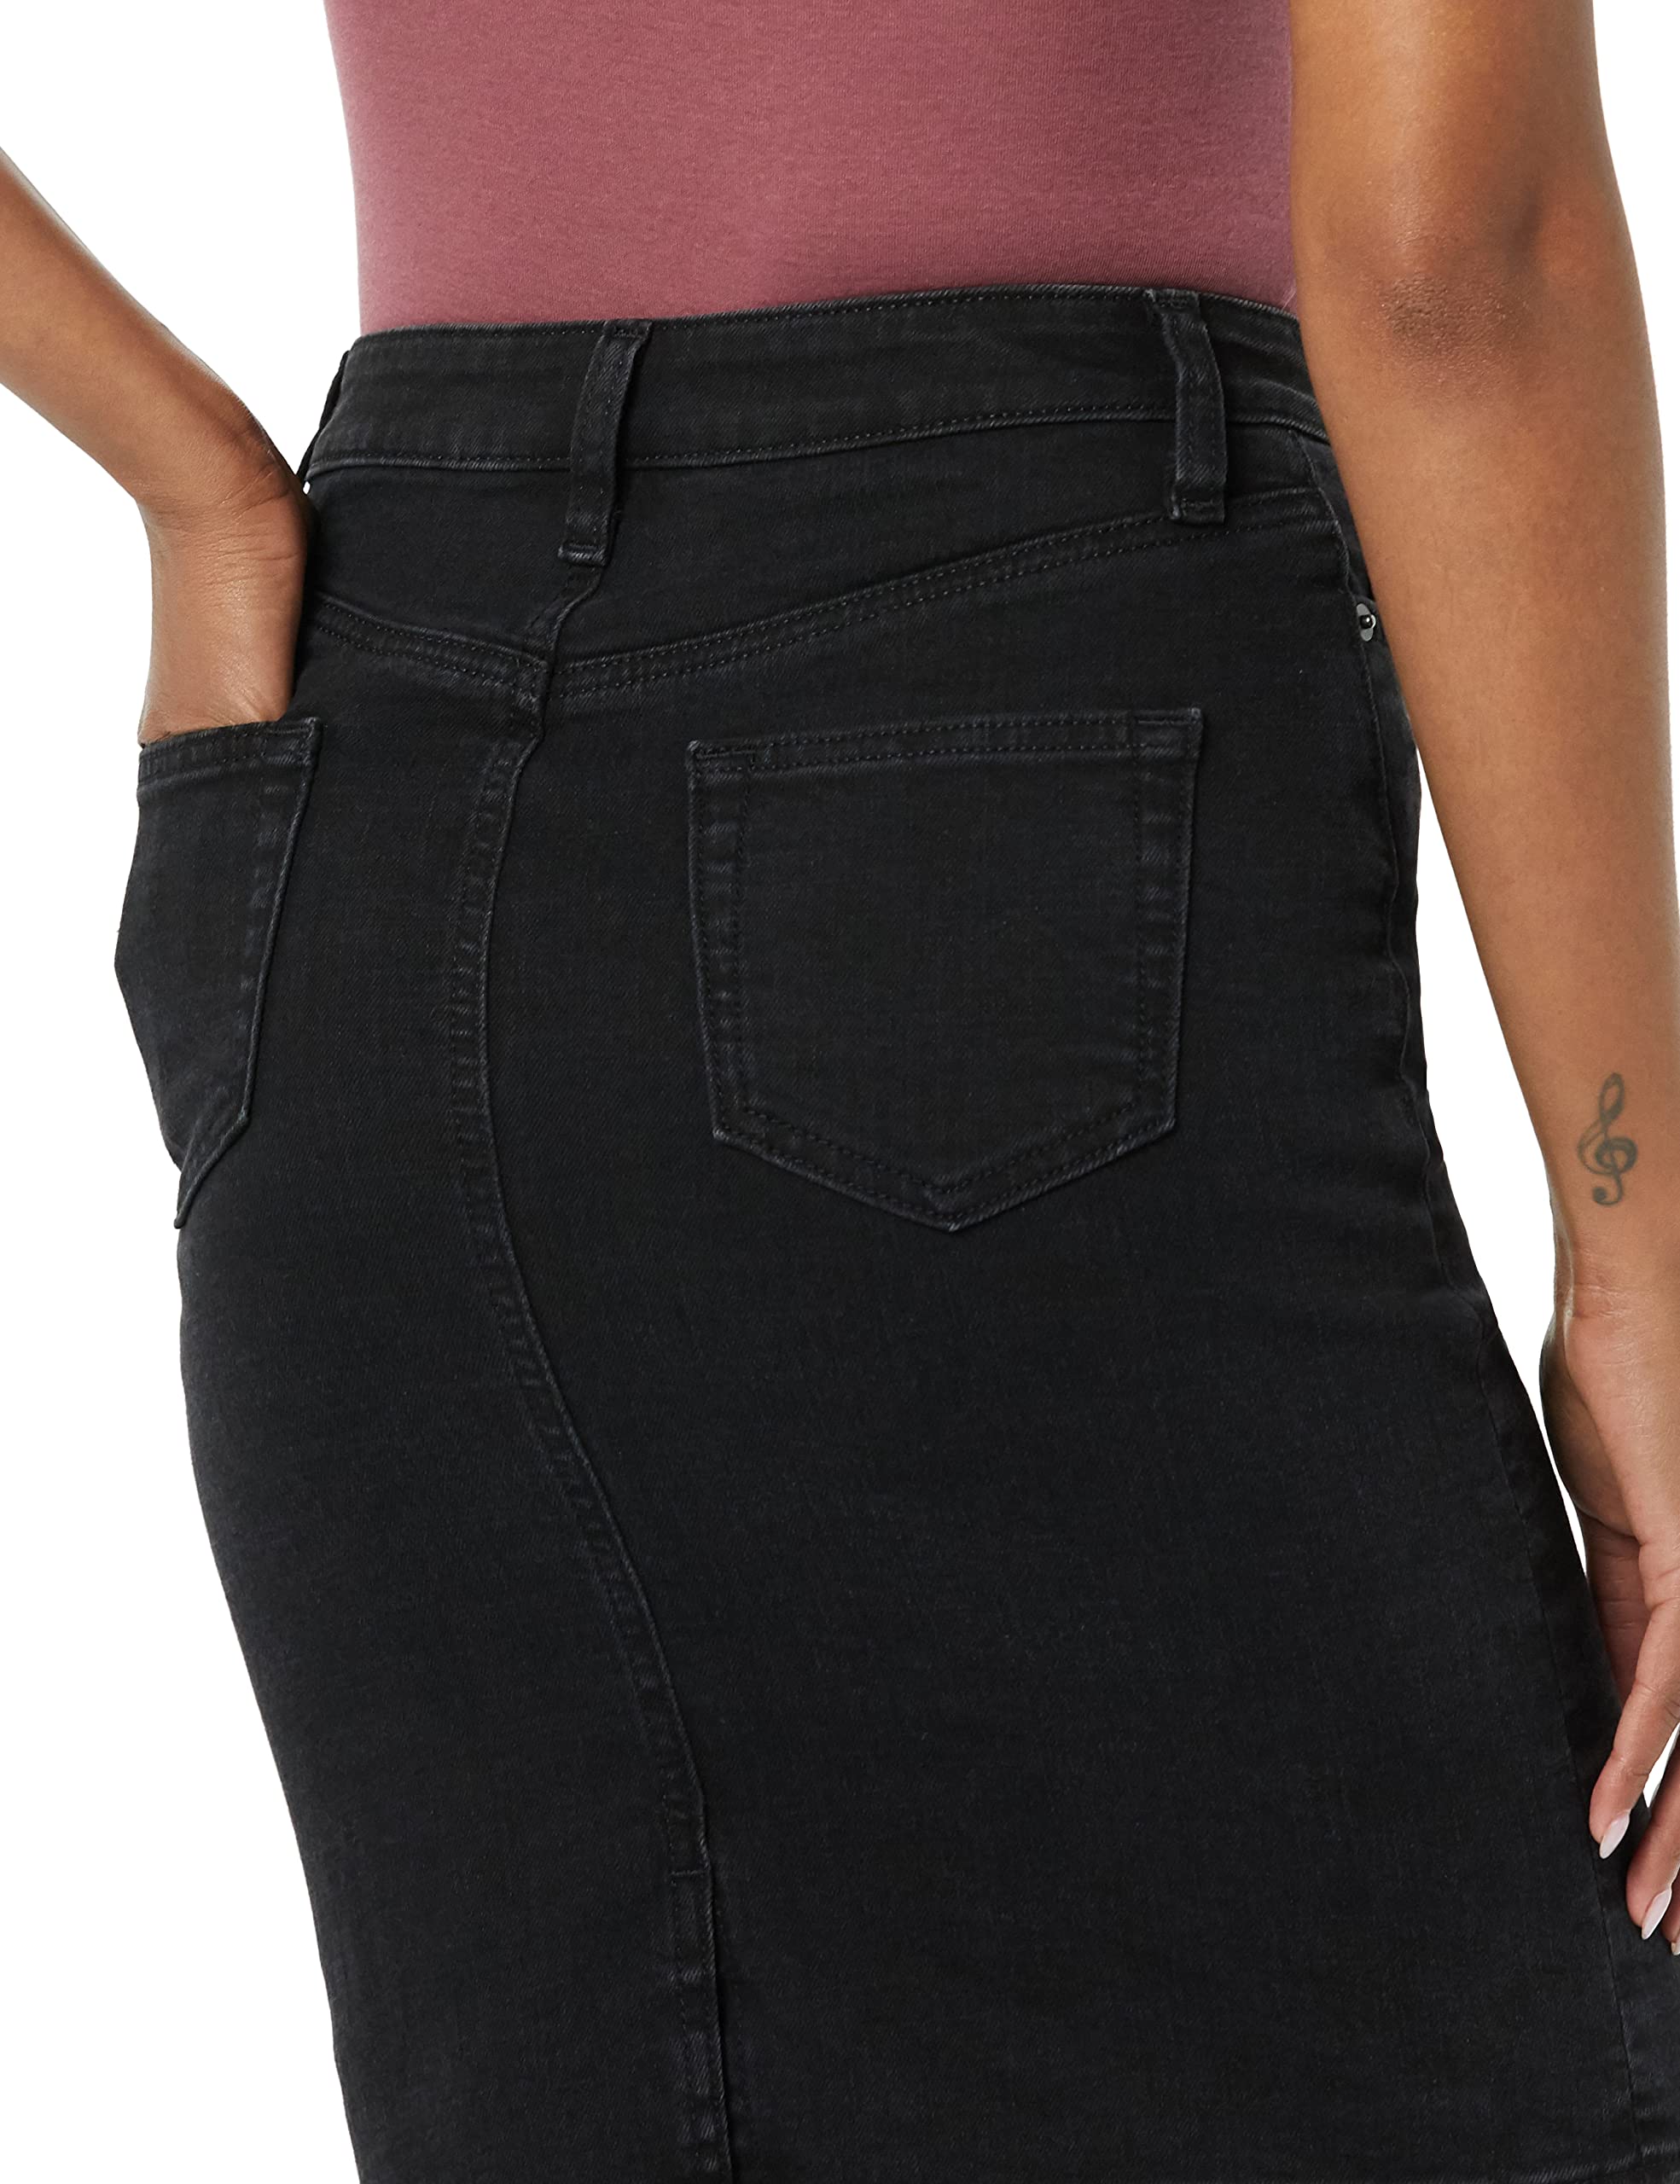 Amazon Essentials Women's Classic 5-Pocket Denim Skirt (Available in Plus Size)